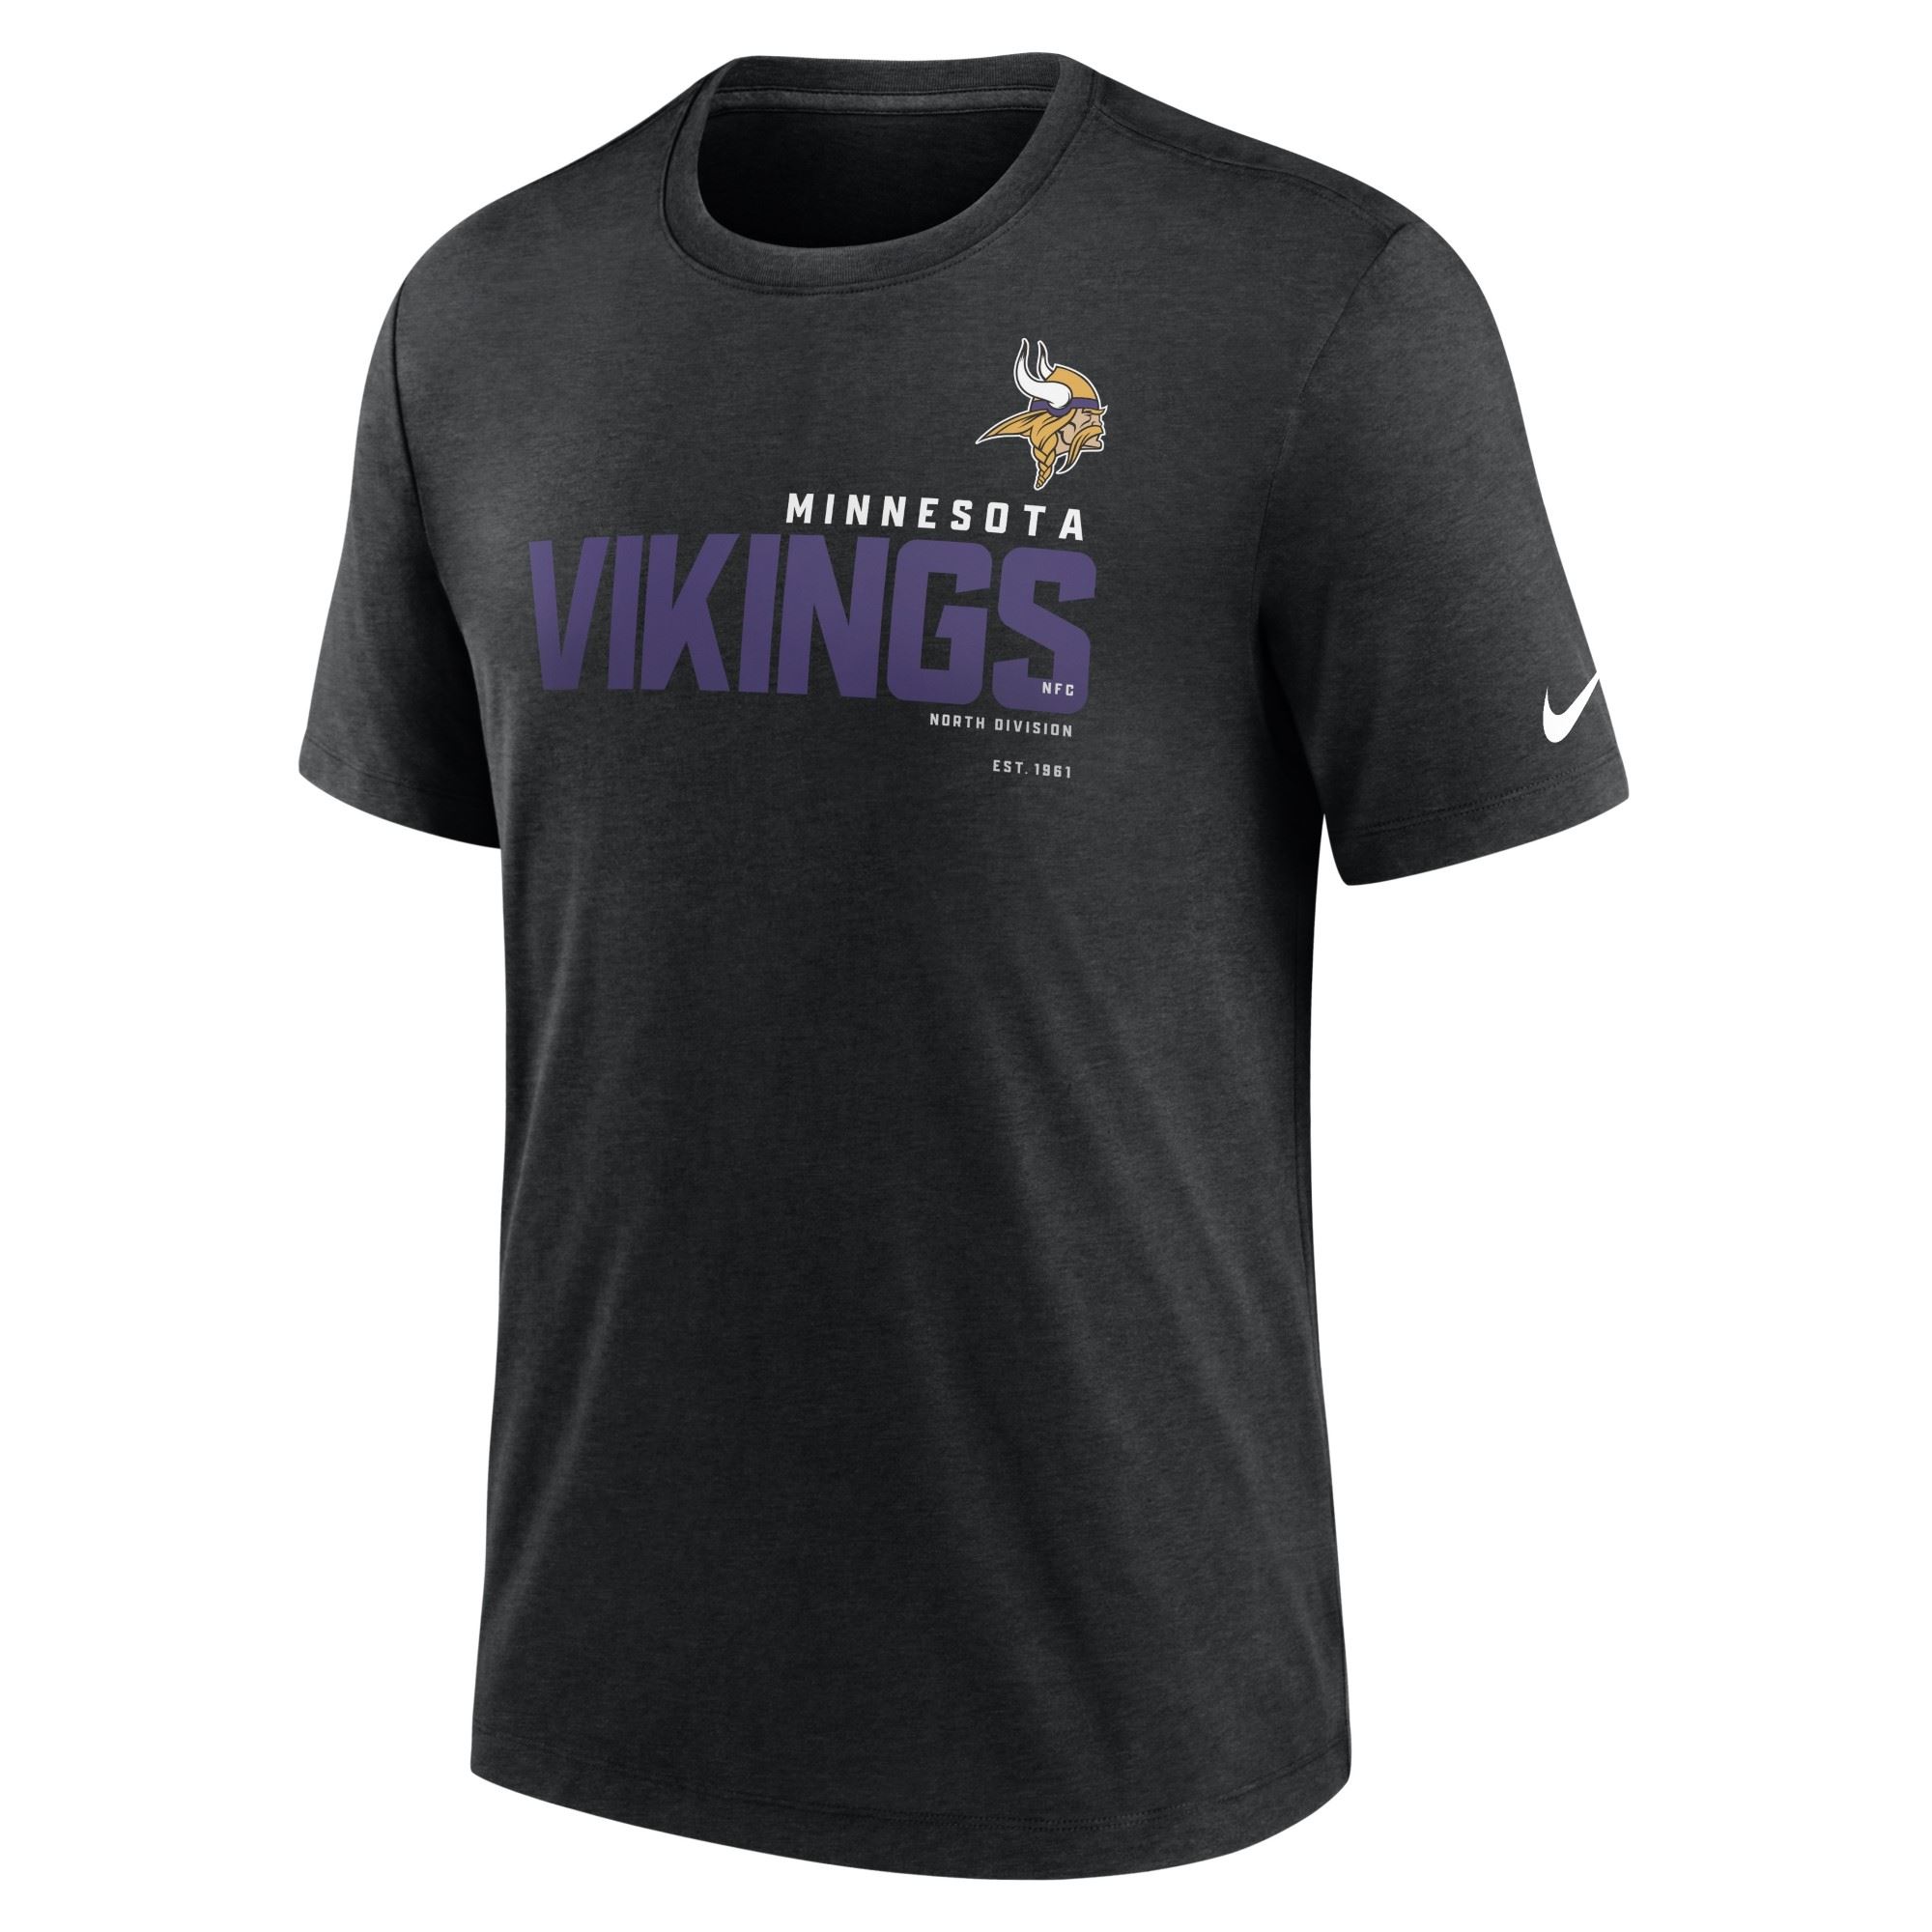 Minnesota Vikings NFL Triblend Team Name Black Heather T-Shirt Nike